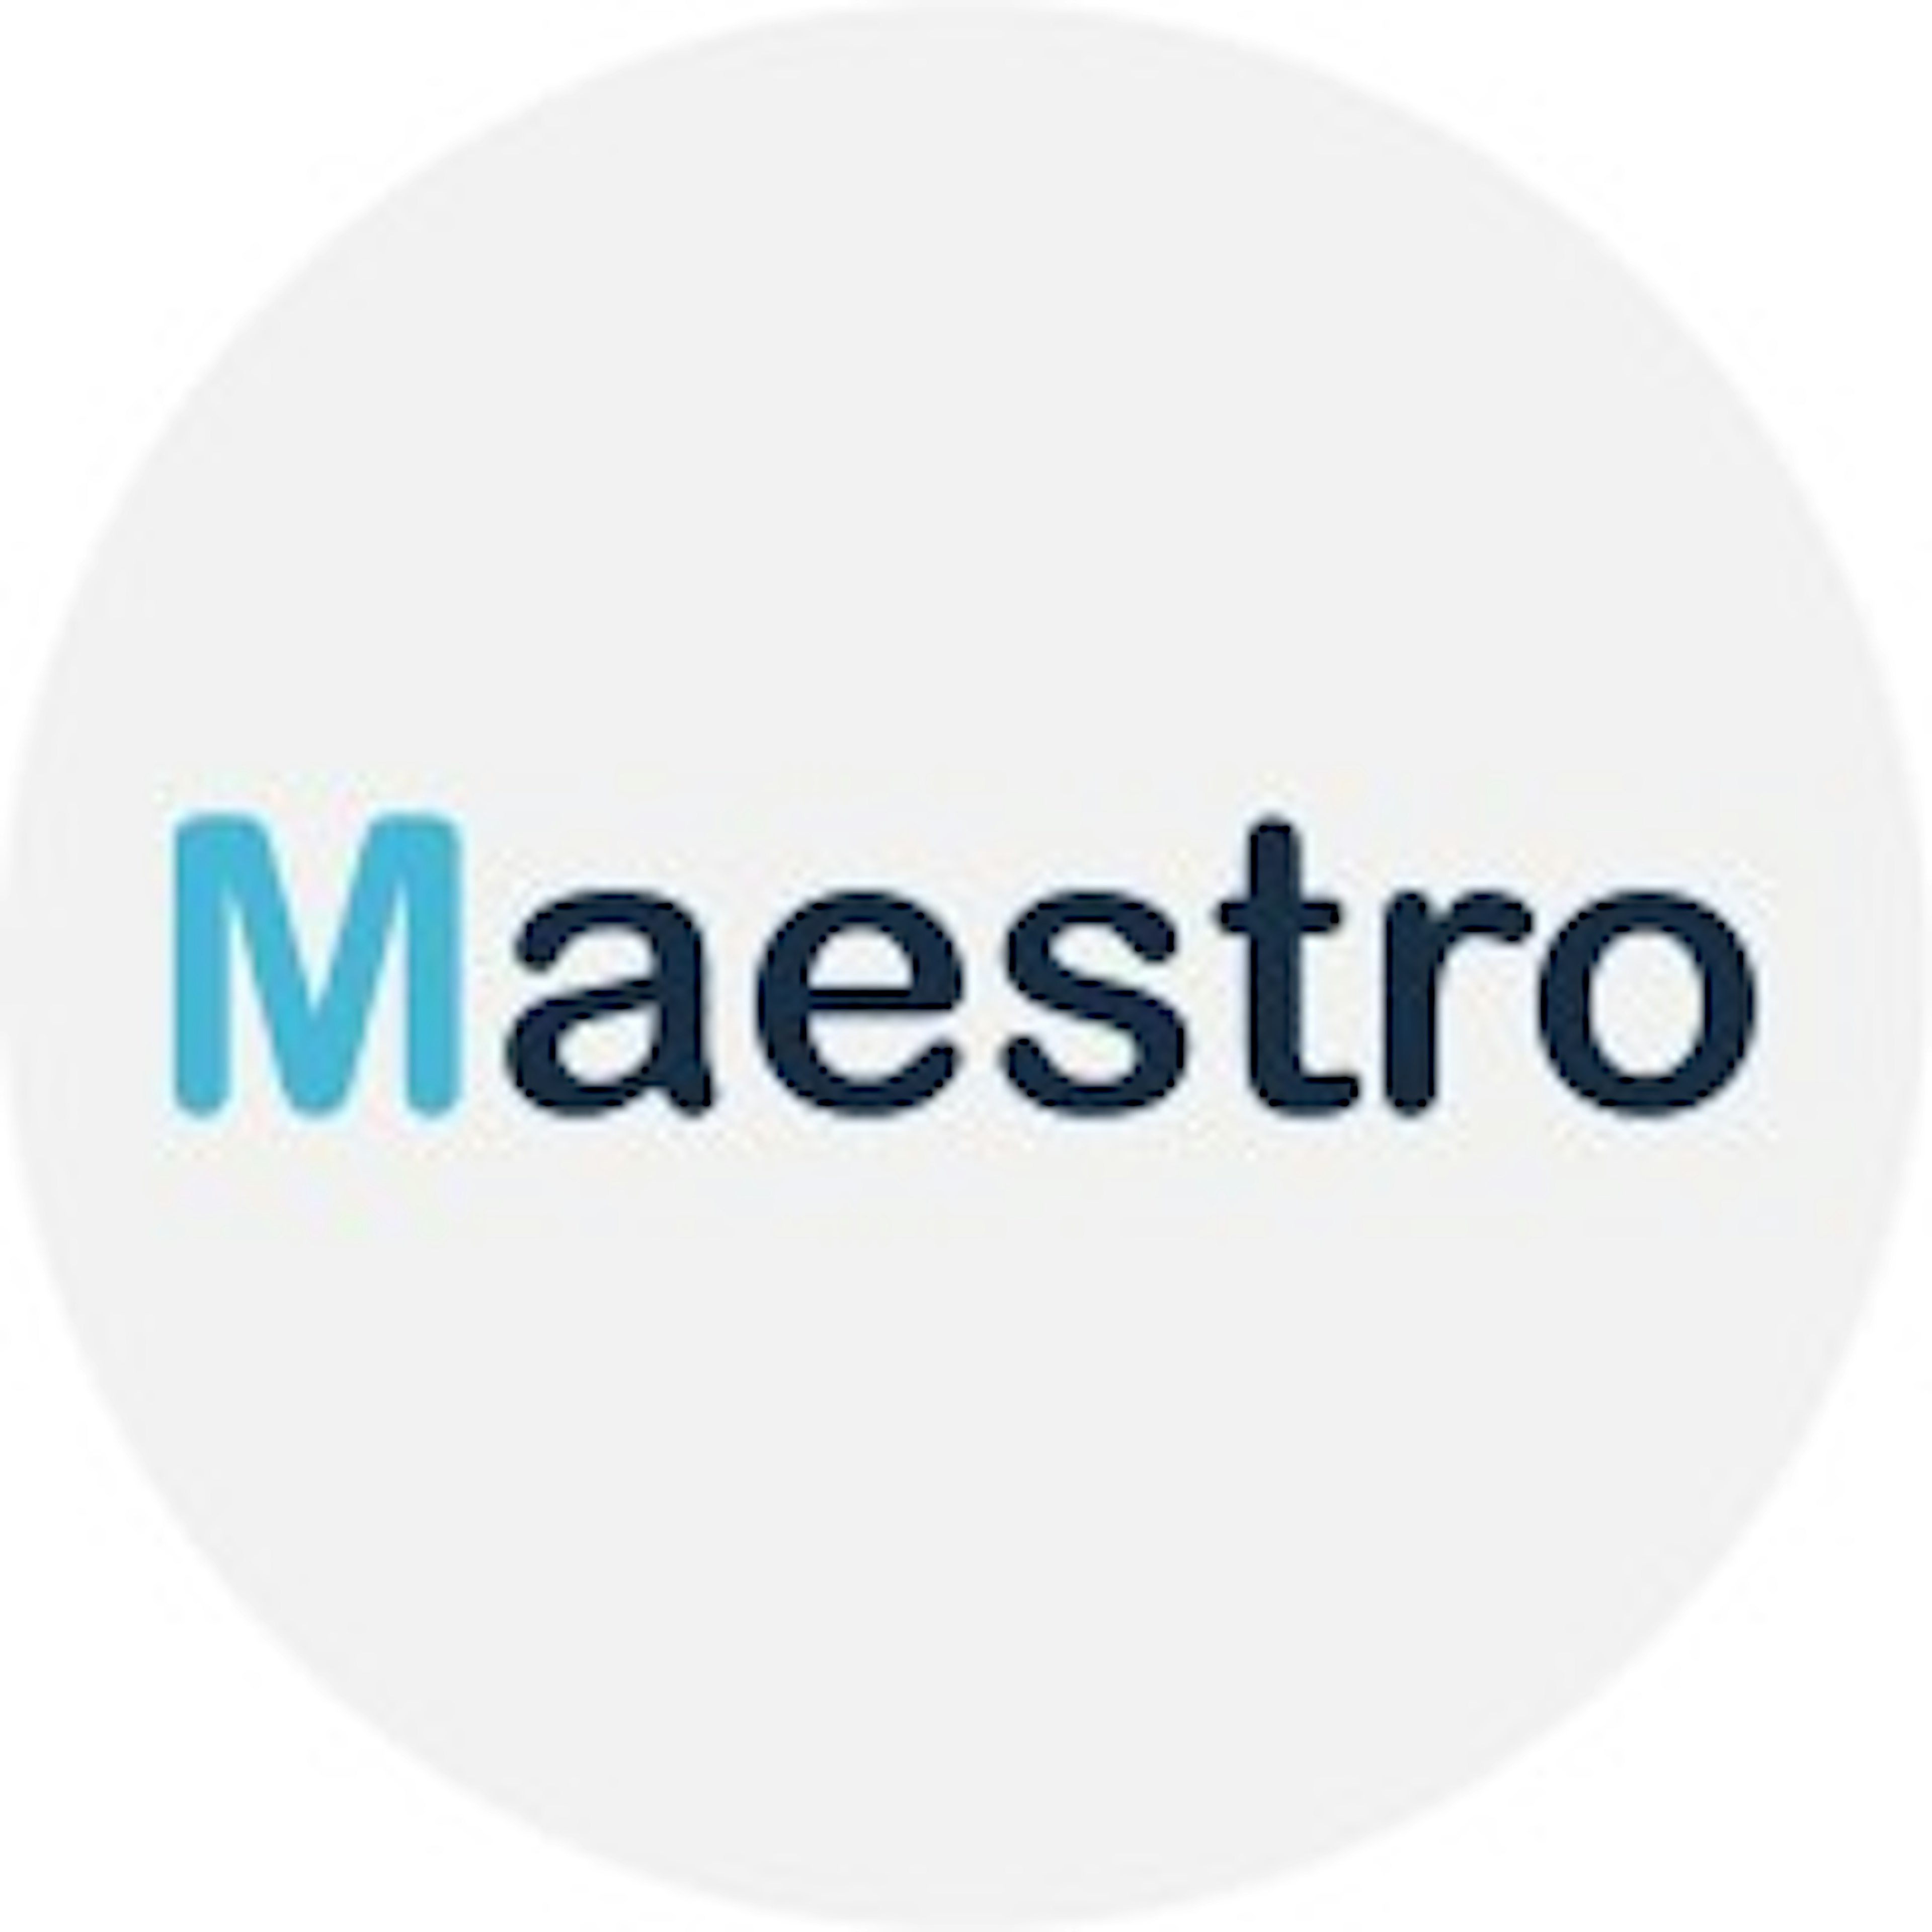 Maestro Payment Logo